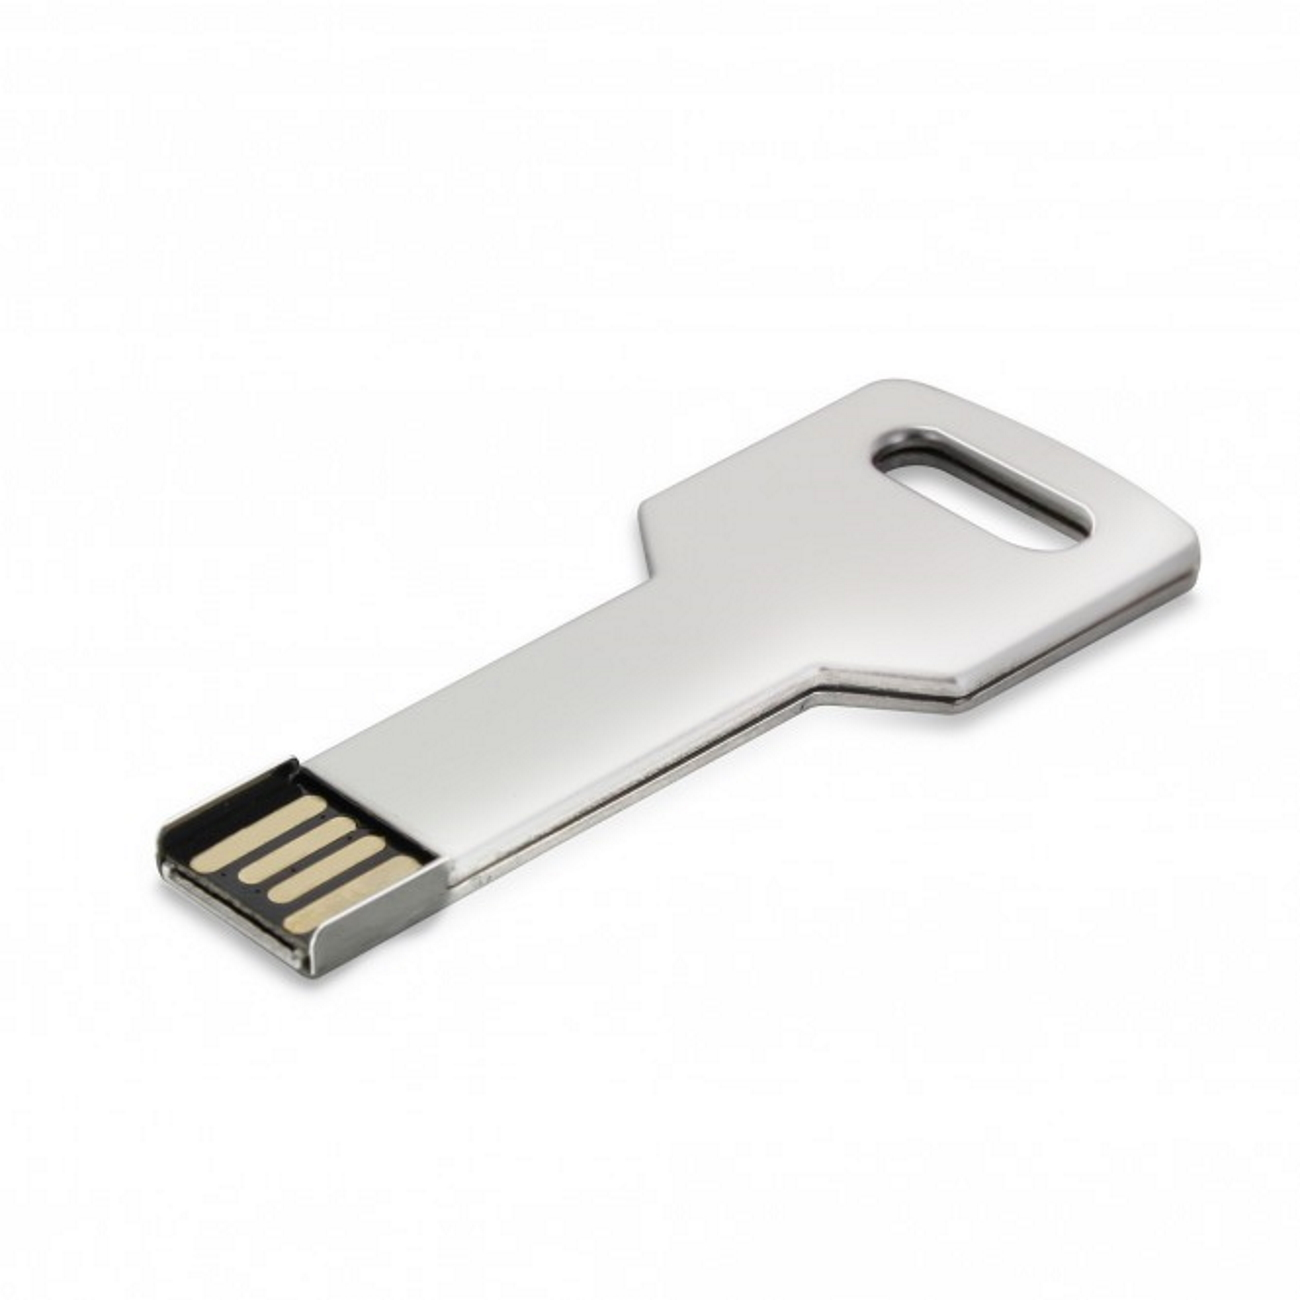 USB GERMANY ®Schlüssel GB) Key USB-Stick (Silber, 8